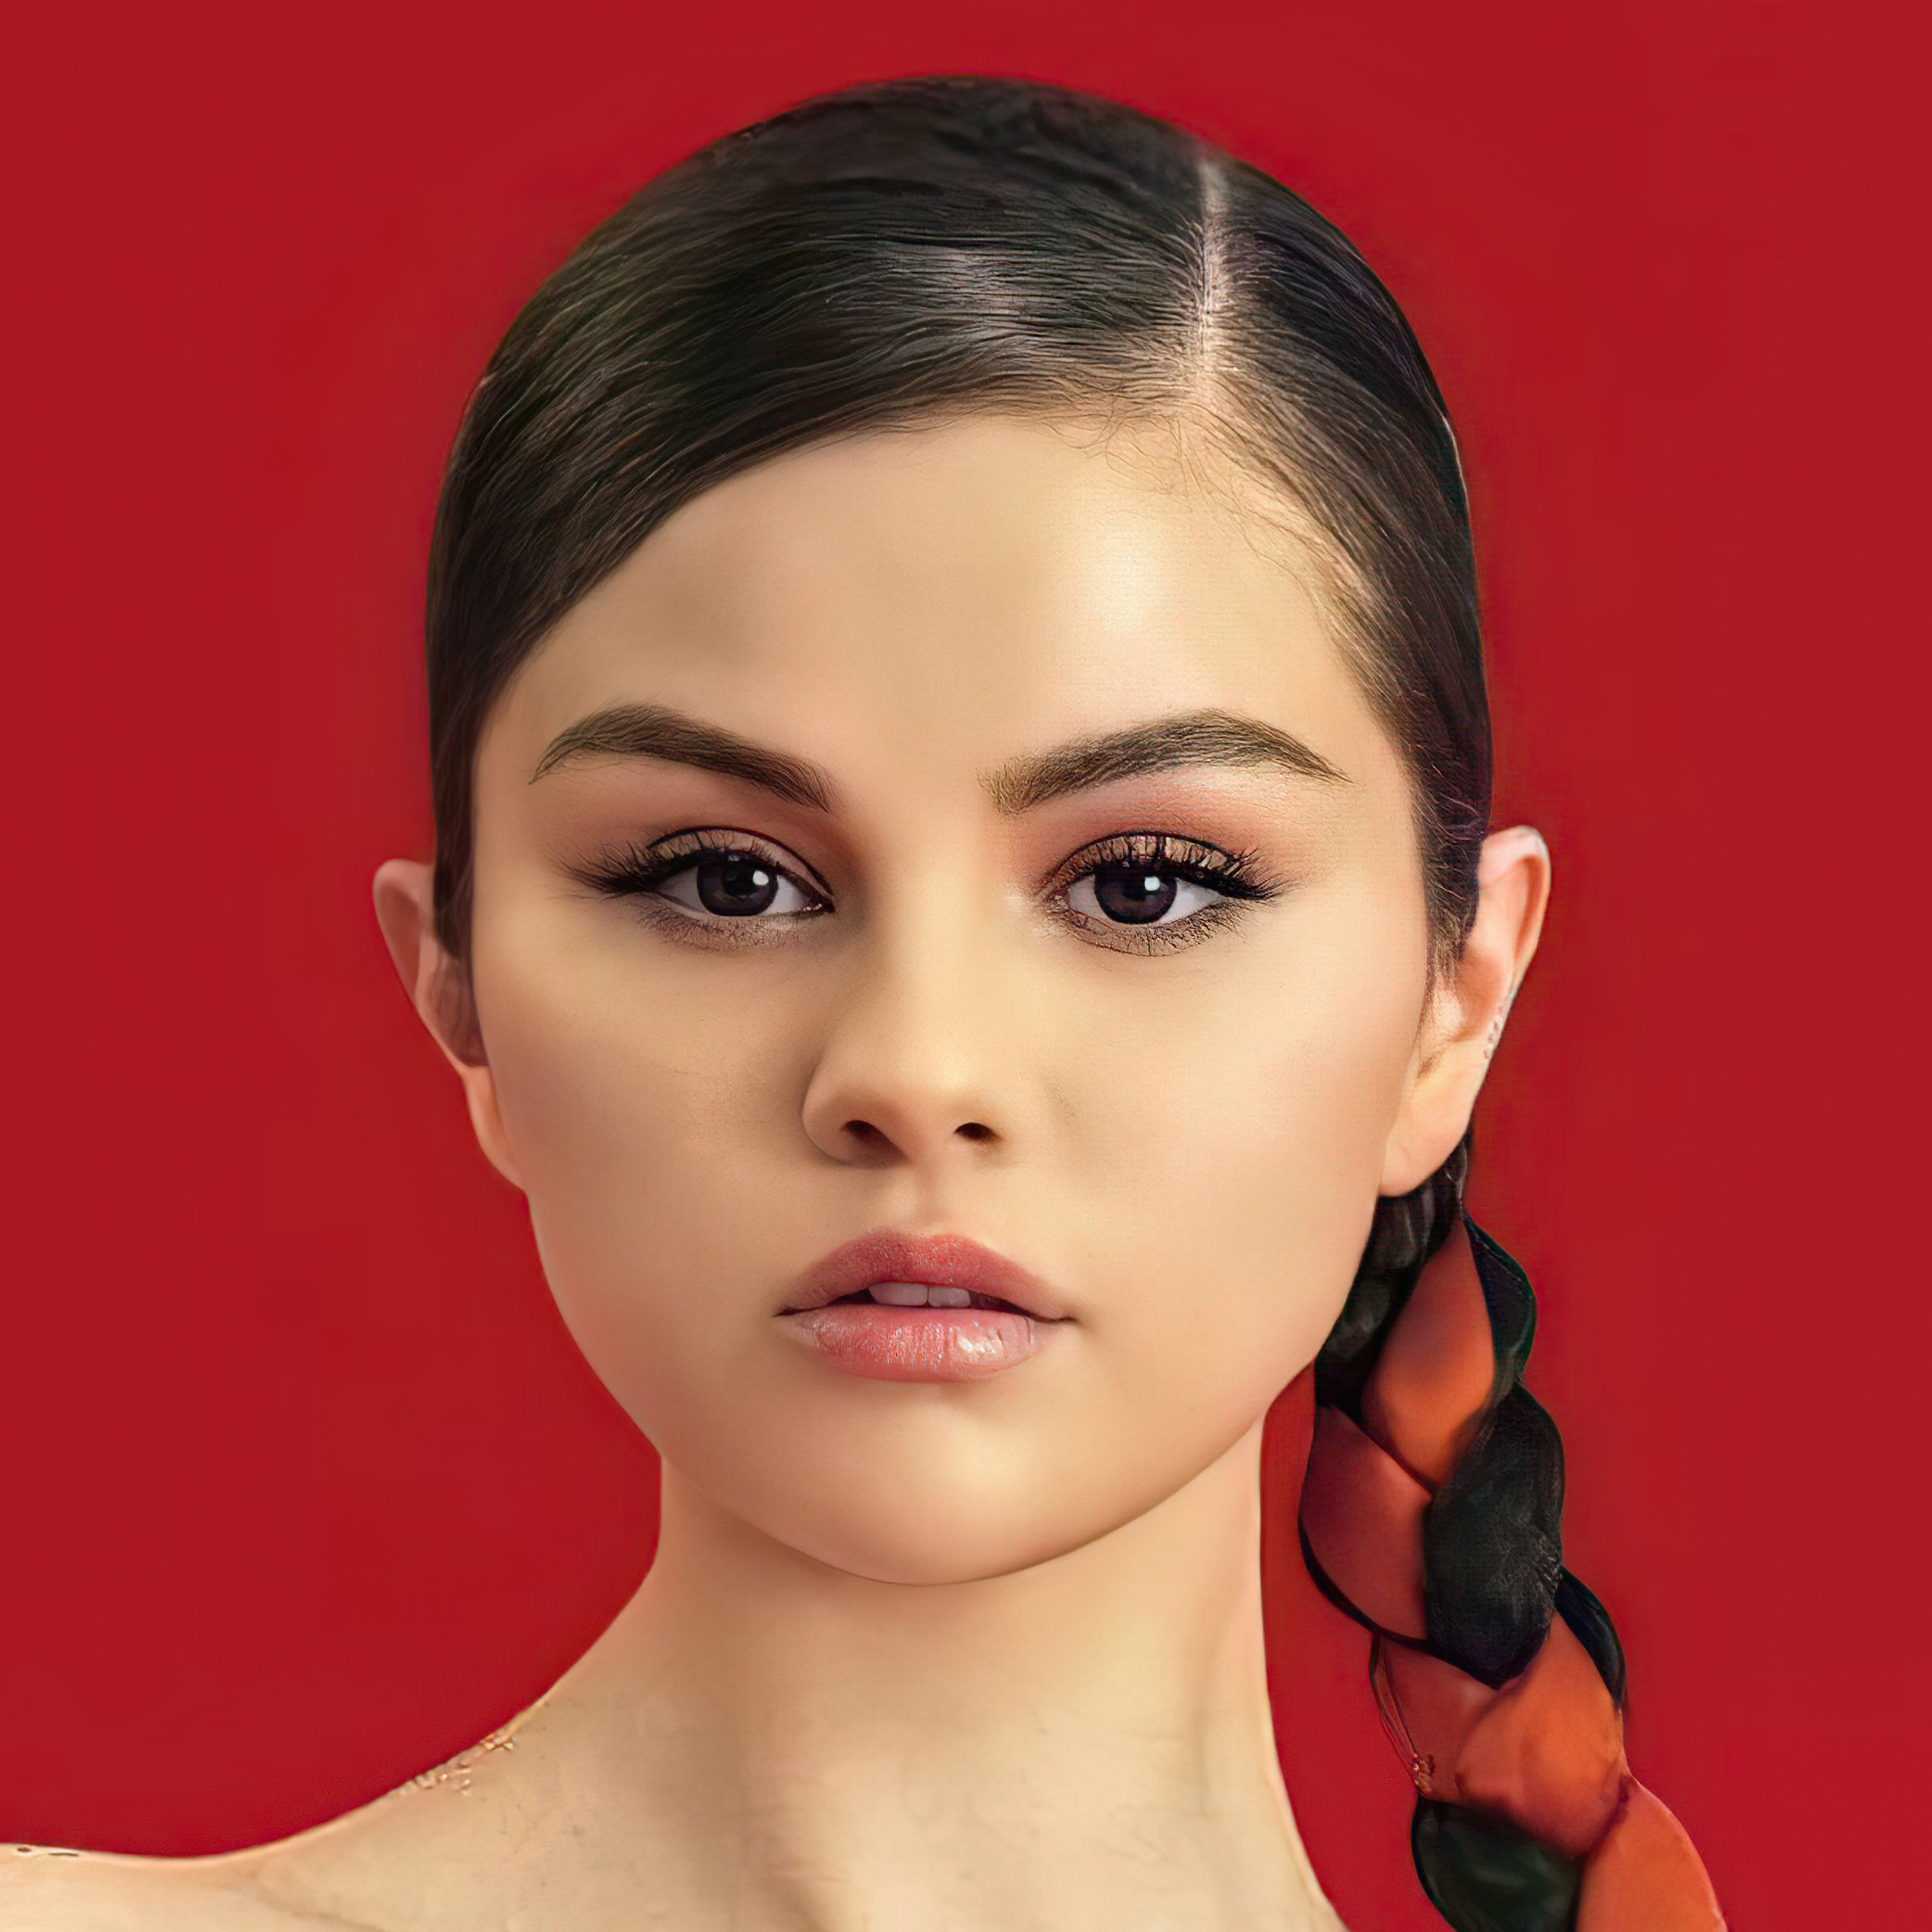 2932x2932 Selena Gomez Revelacion Album Photoshoot 2021 5k Ipad Pro Retina Display HD 4k Wallpapers, Images, Backgrounds, Photos and Pictures